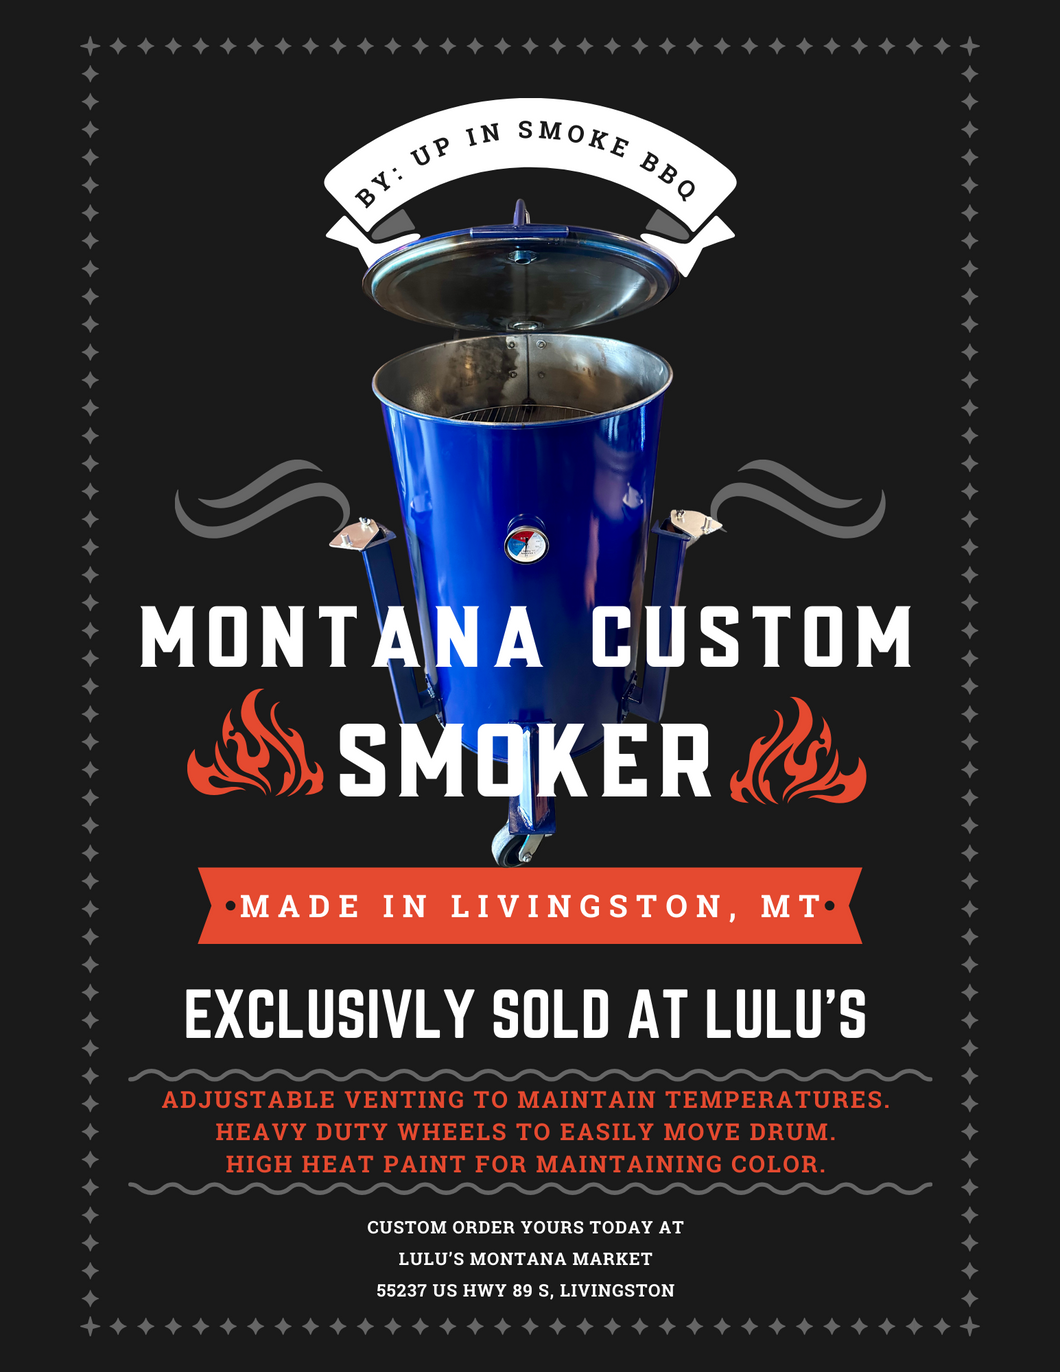 Montana Custome Smoker - By: Up in Smoke BBQ